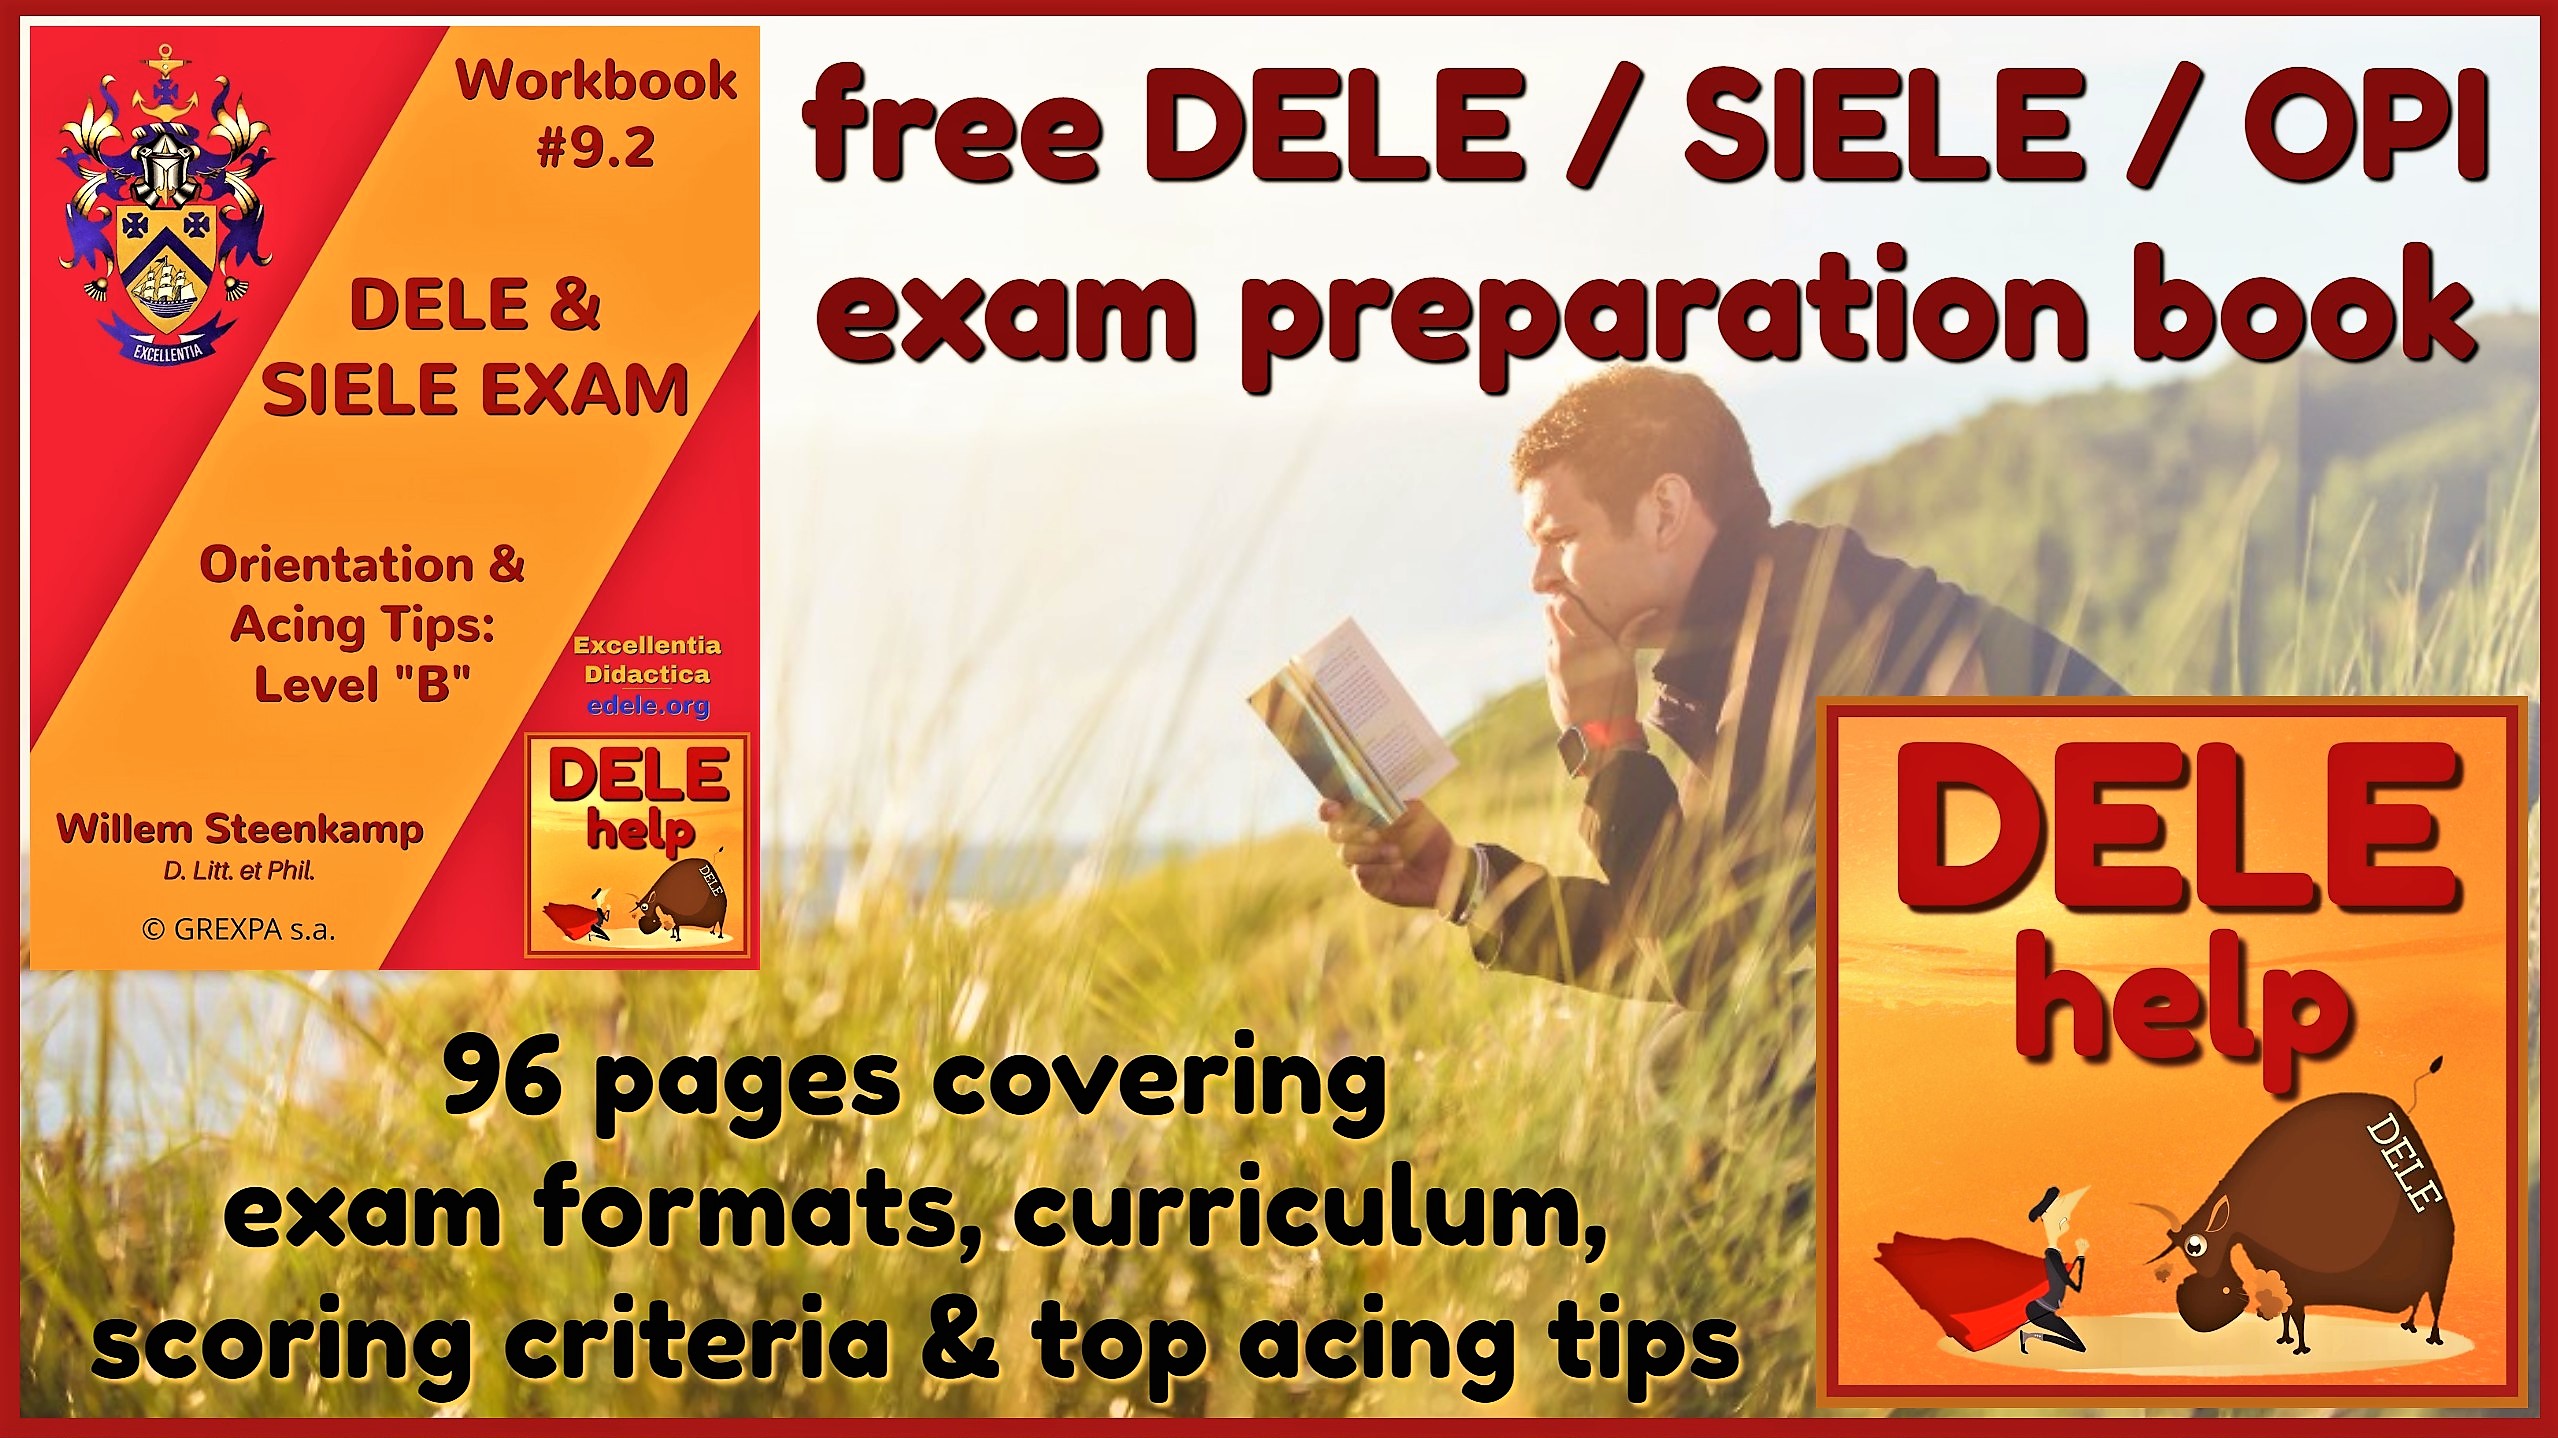 Focus your DELE / SIELE / OPI exam preparation